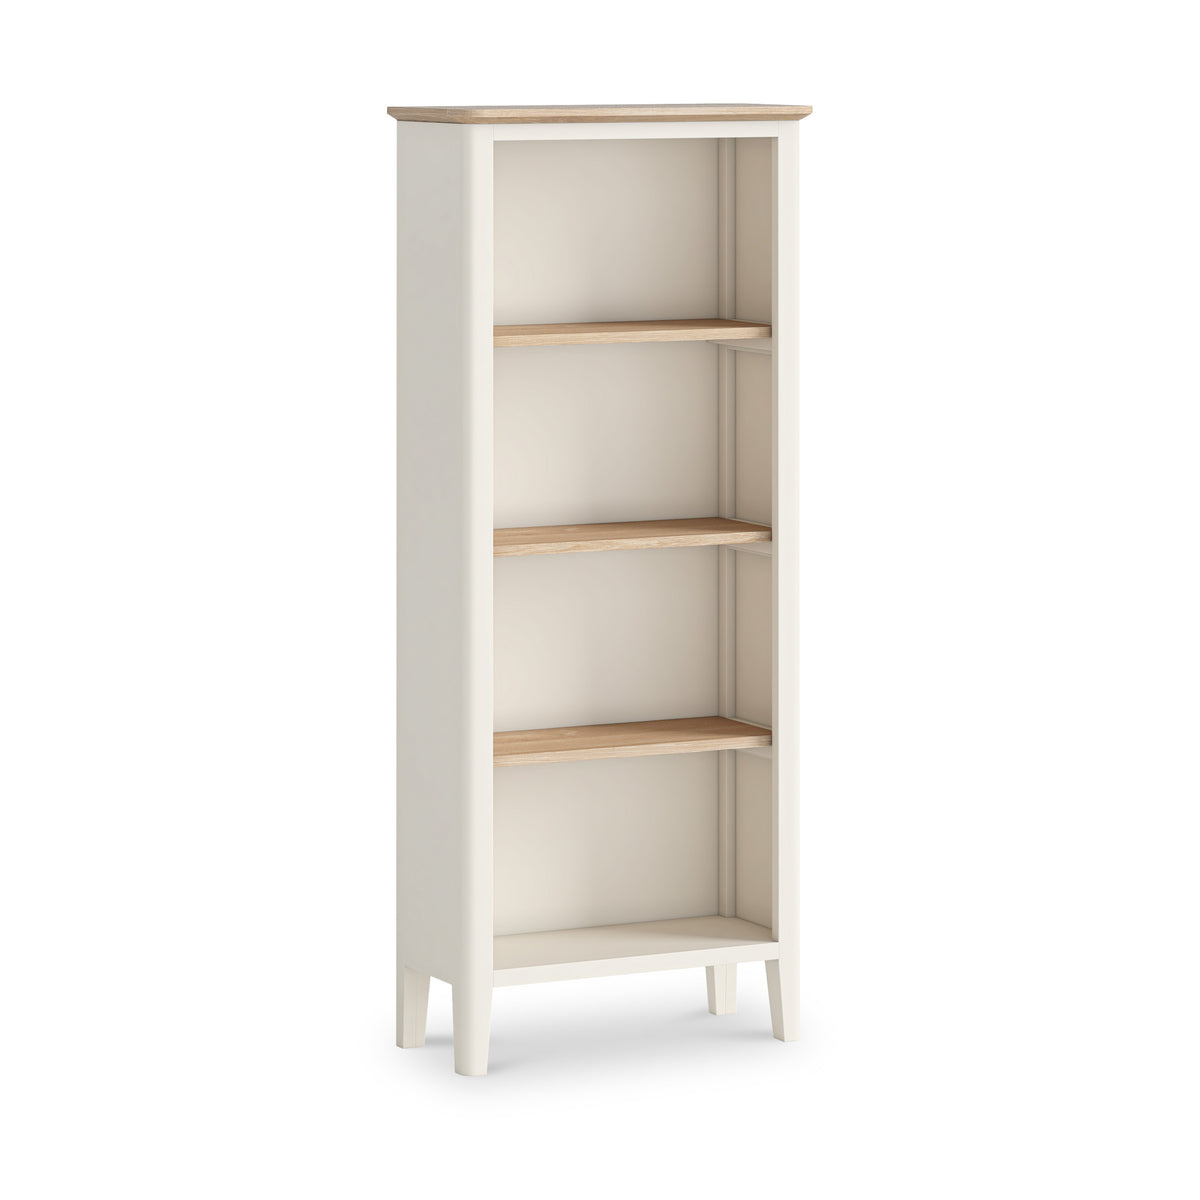 Penrose Coconut White Slim Bookcase from Roseland Furniture